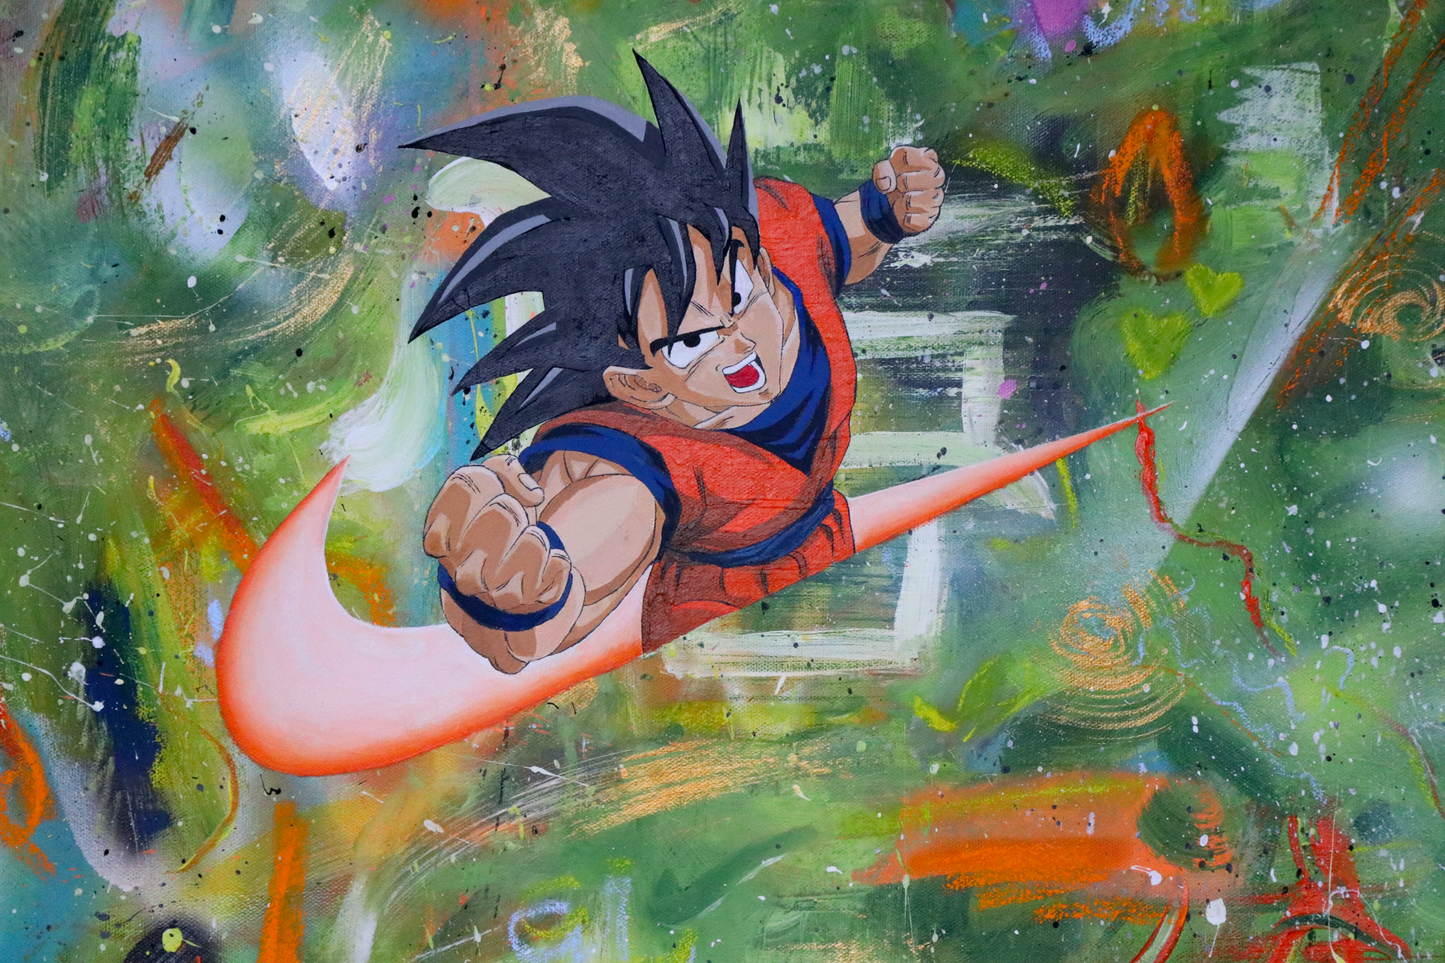 Swoosh x Son Goku - Original